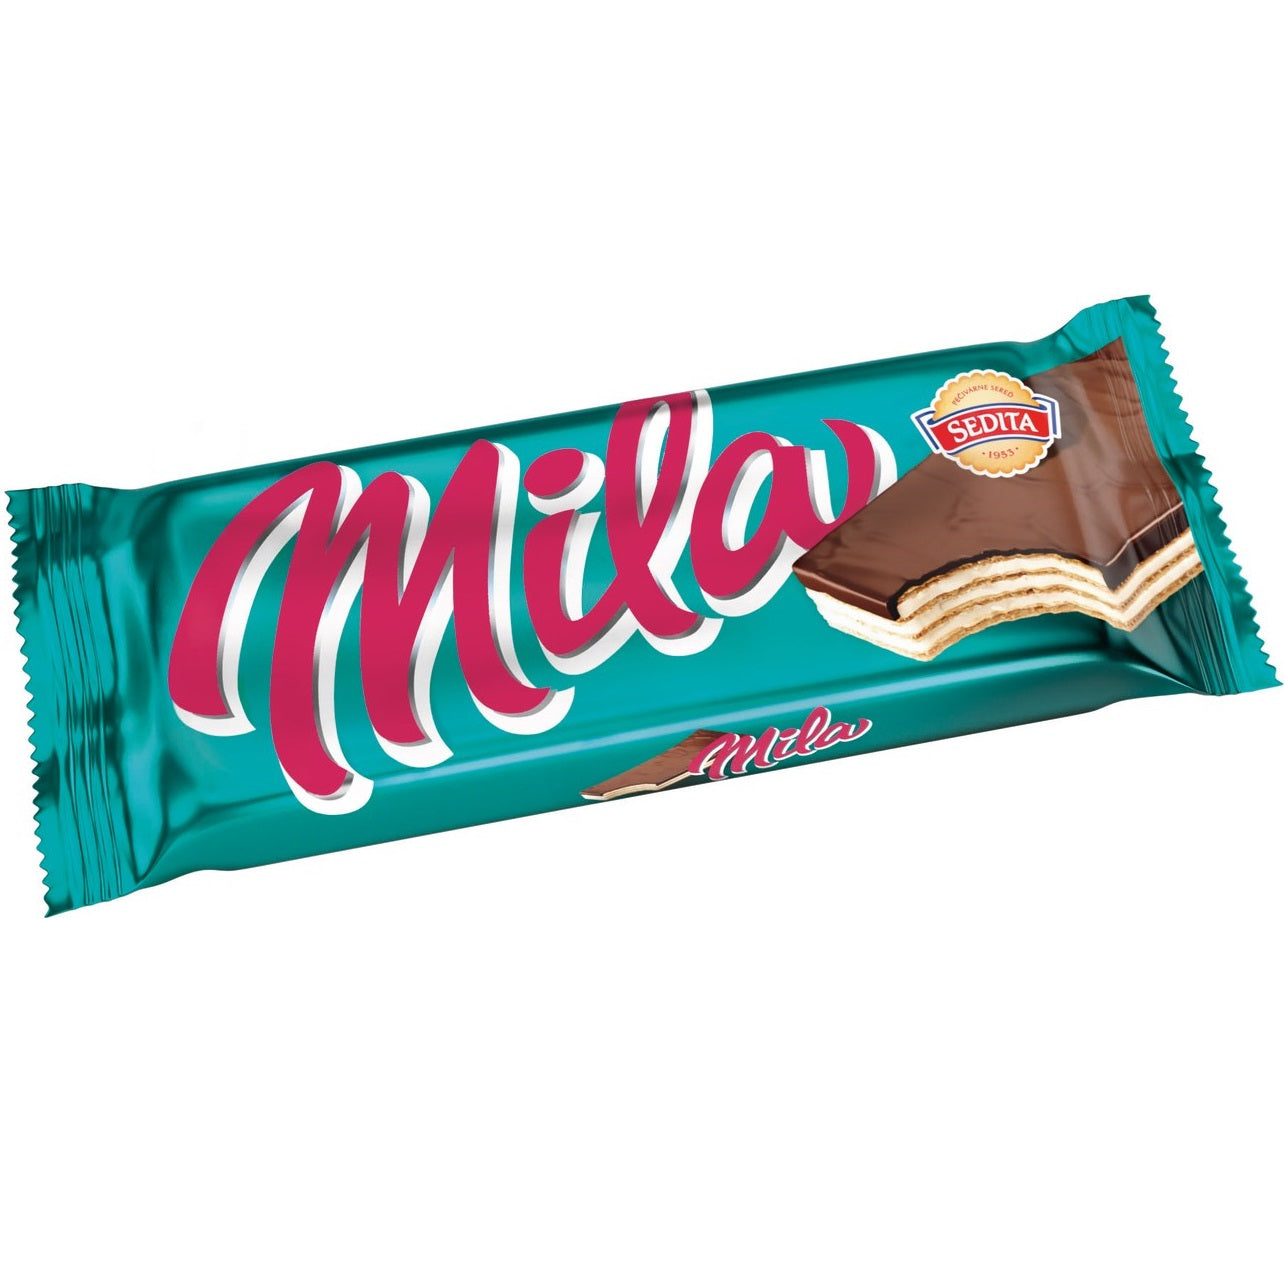 Sedita Mila Crispy Wafers With Milk Cream Filling